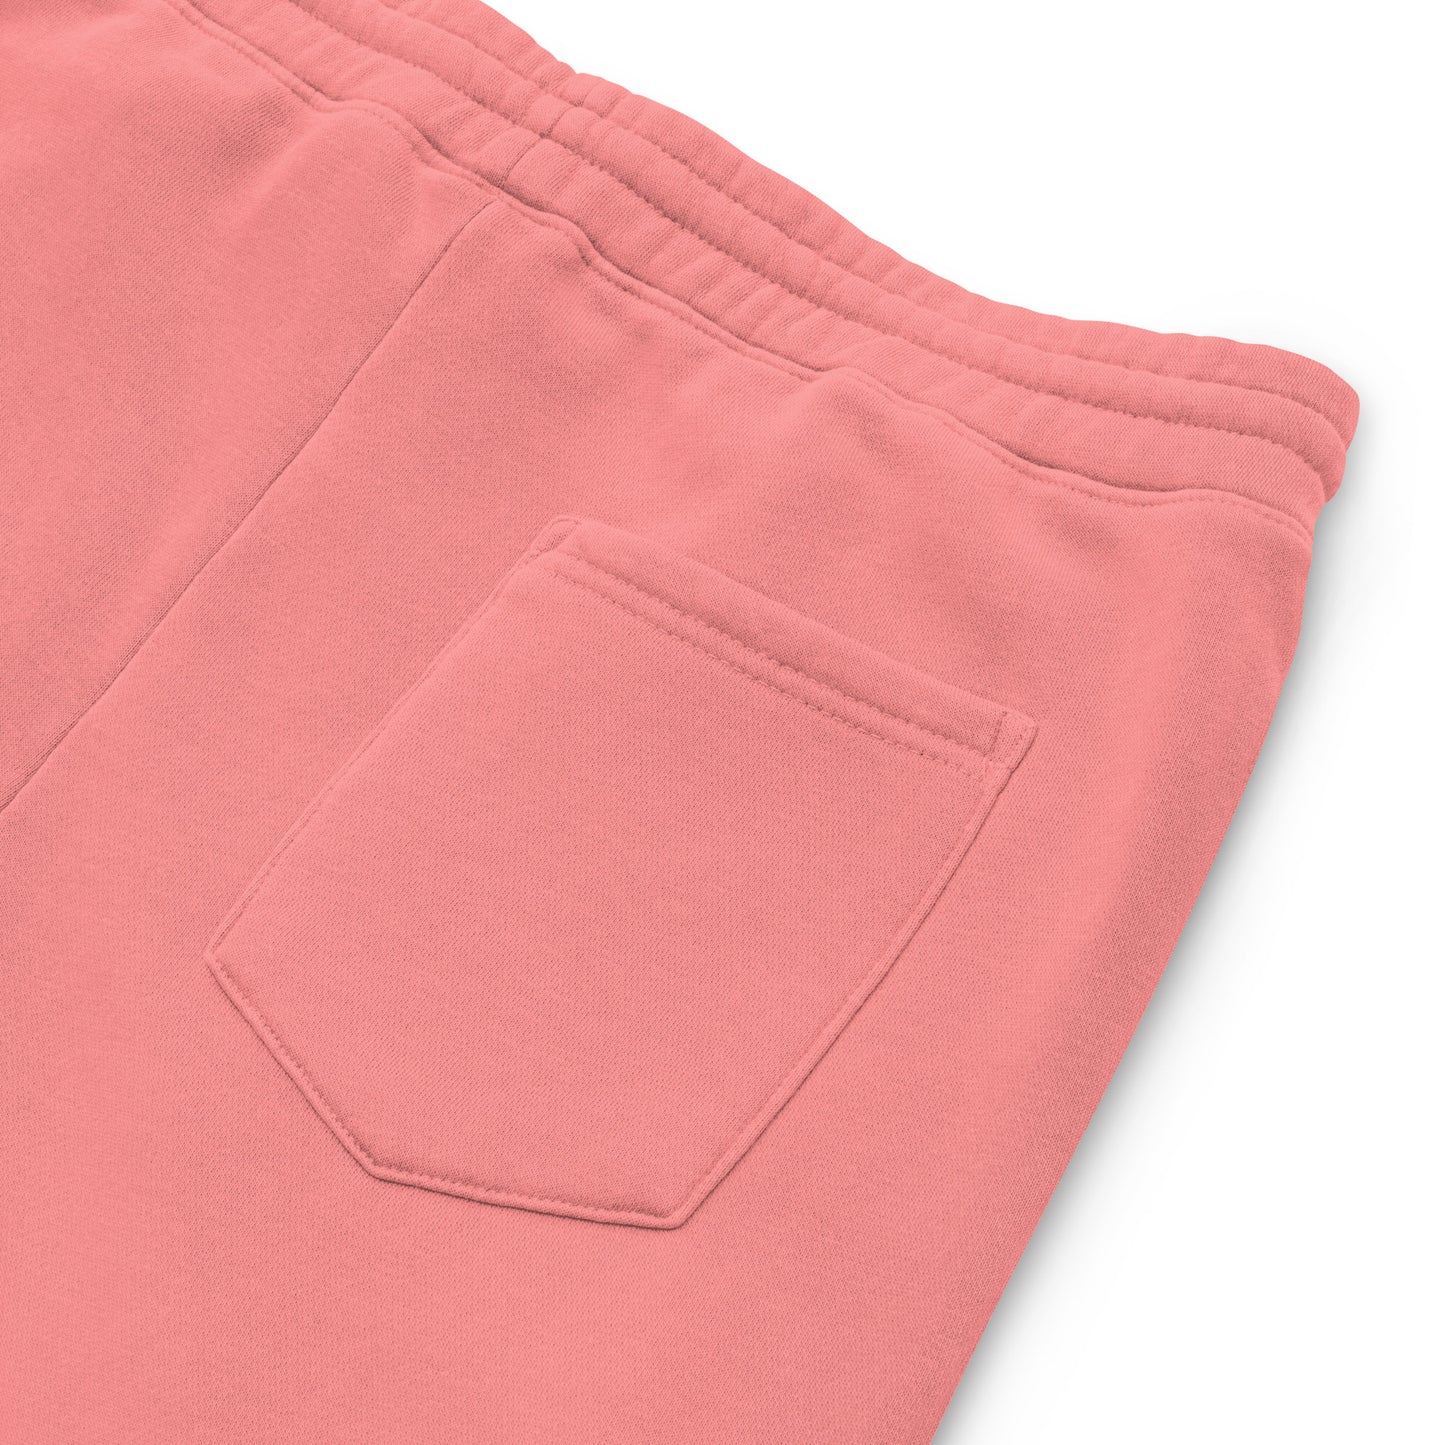 RSN - pigment-dyed sweatpants